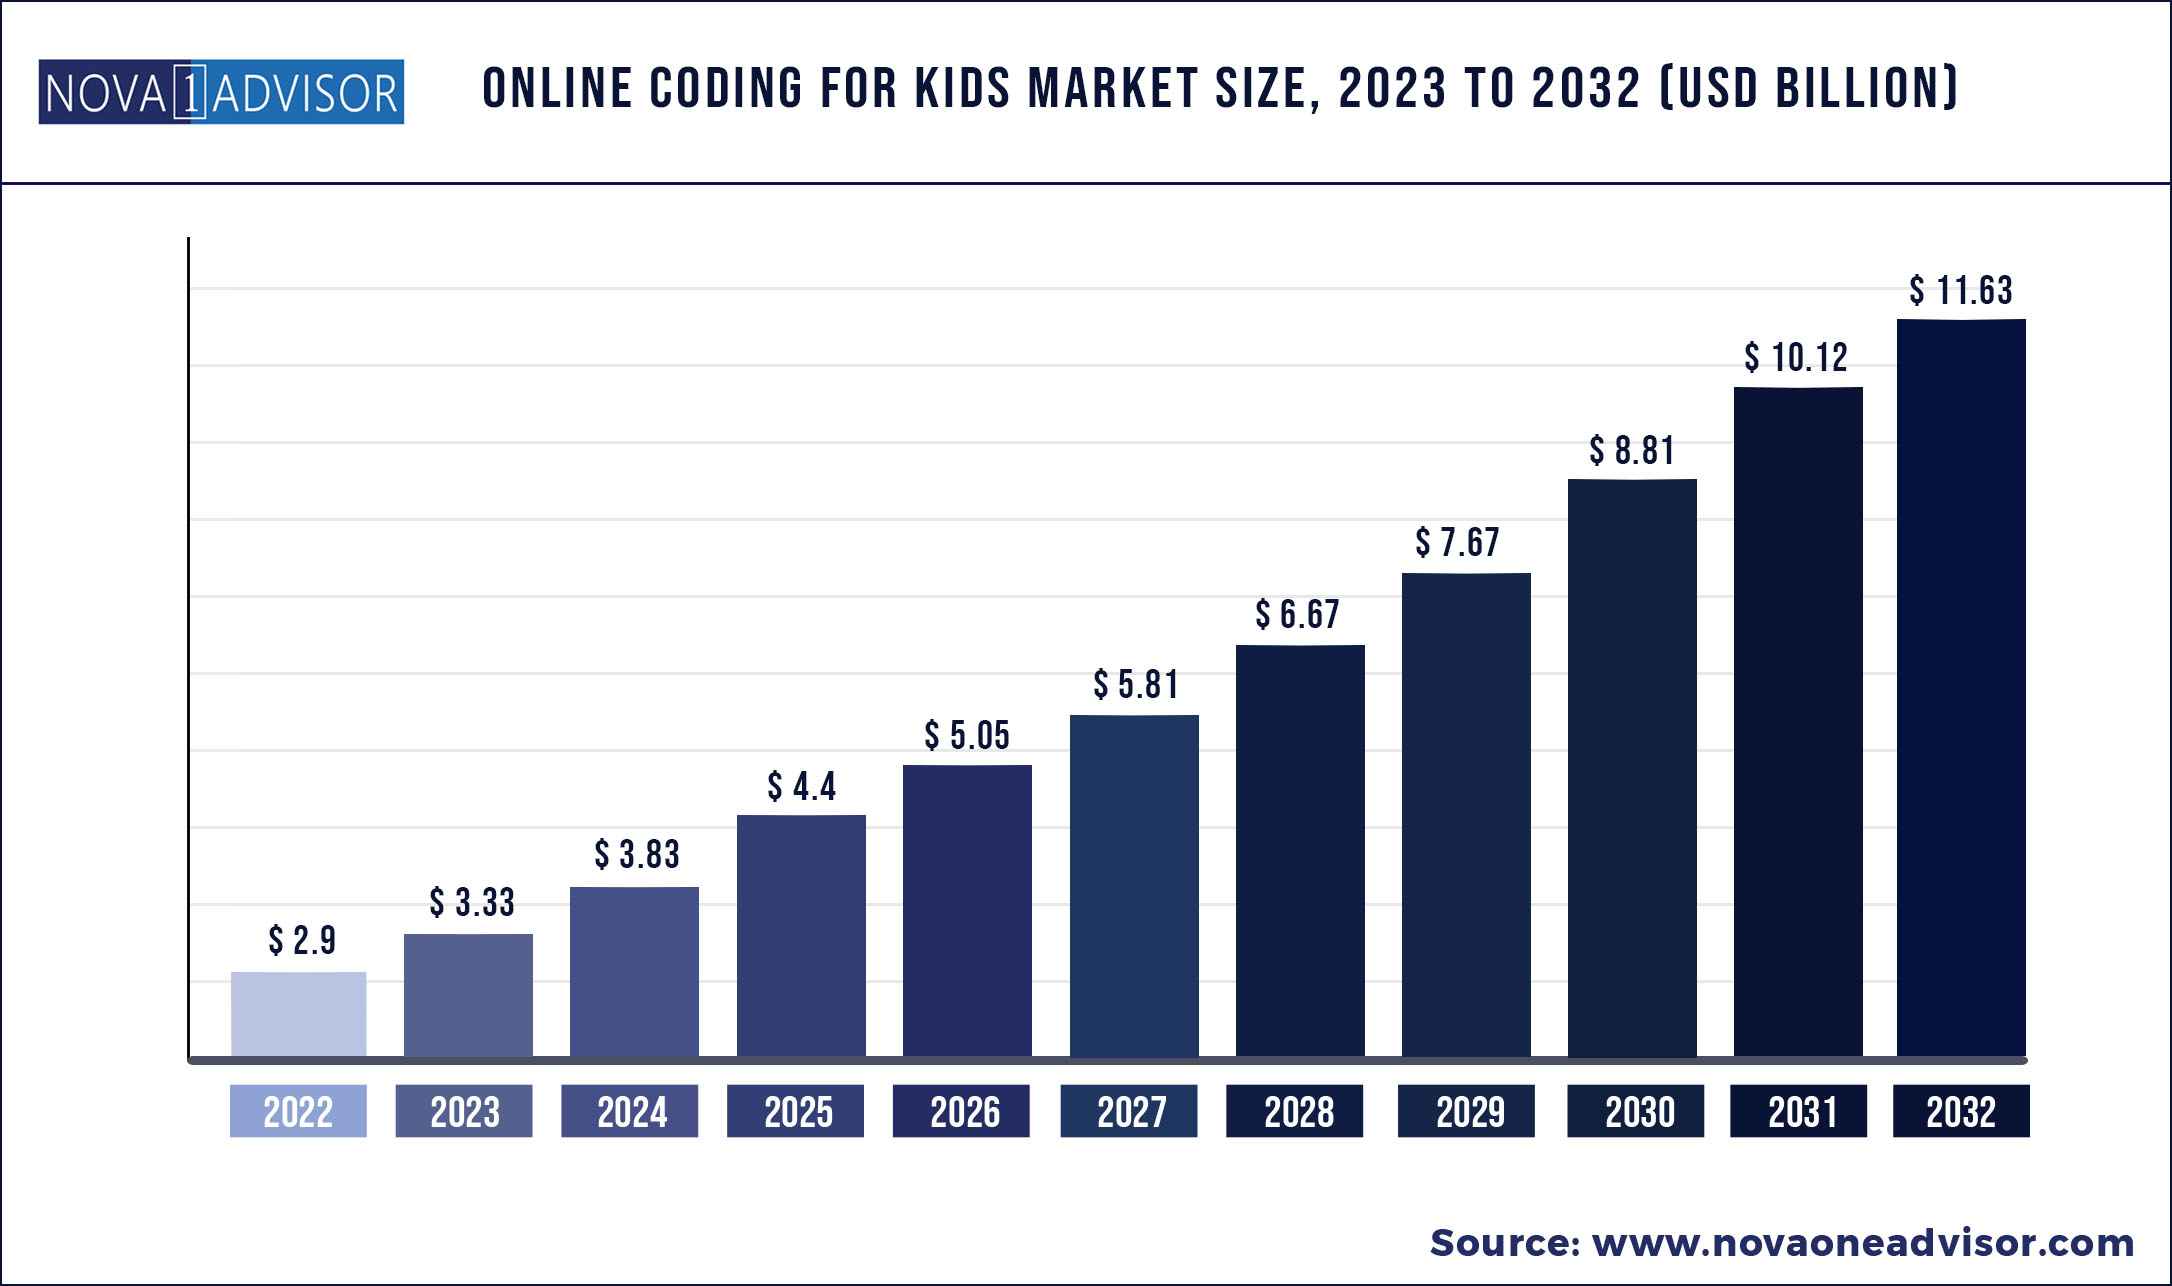 Online Coding For Kids Market Size